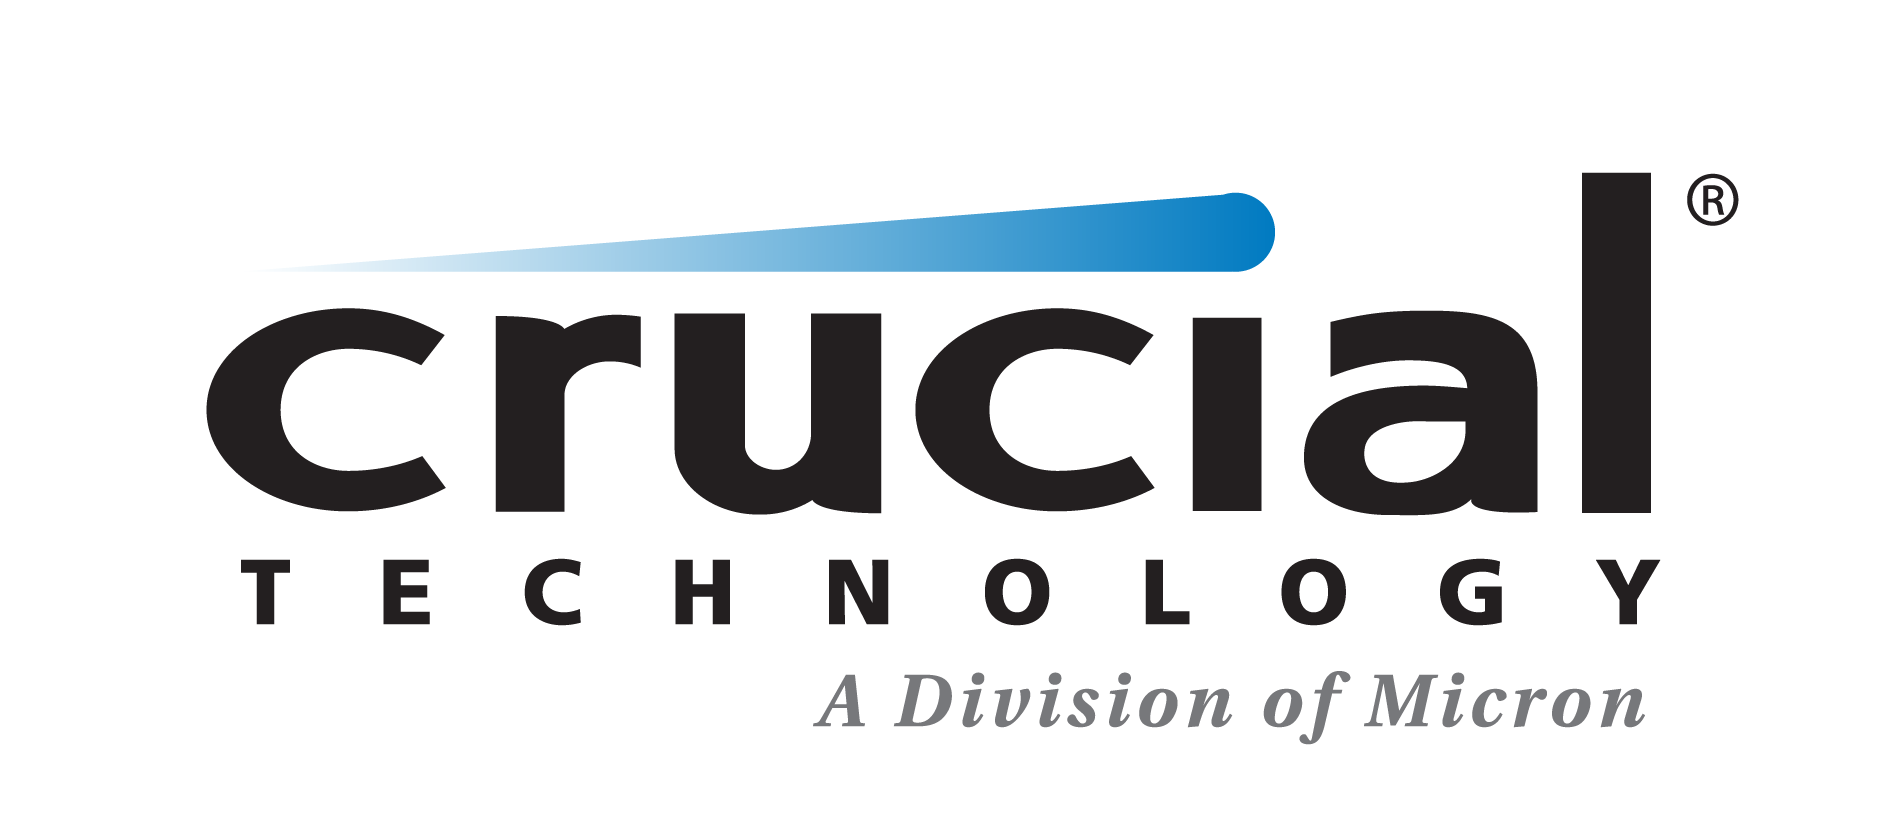 crucial_logo